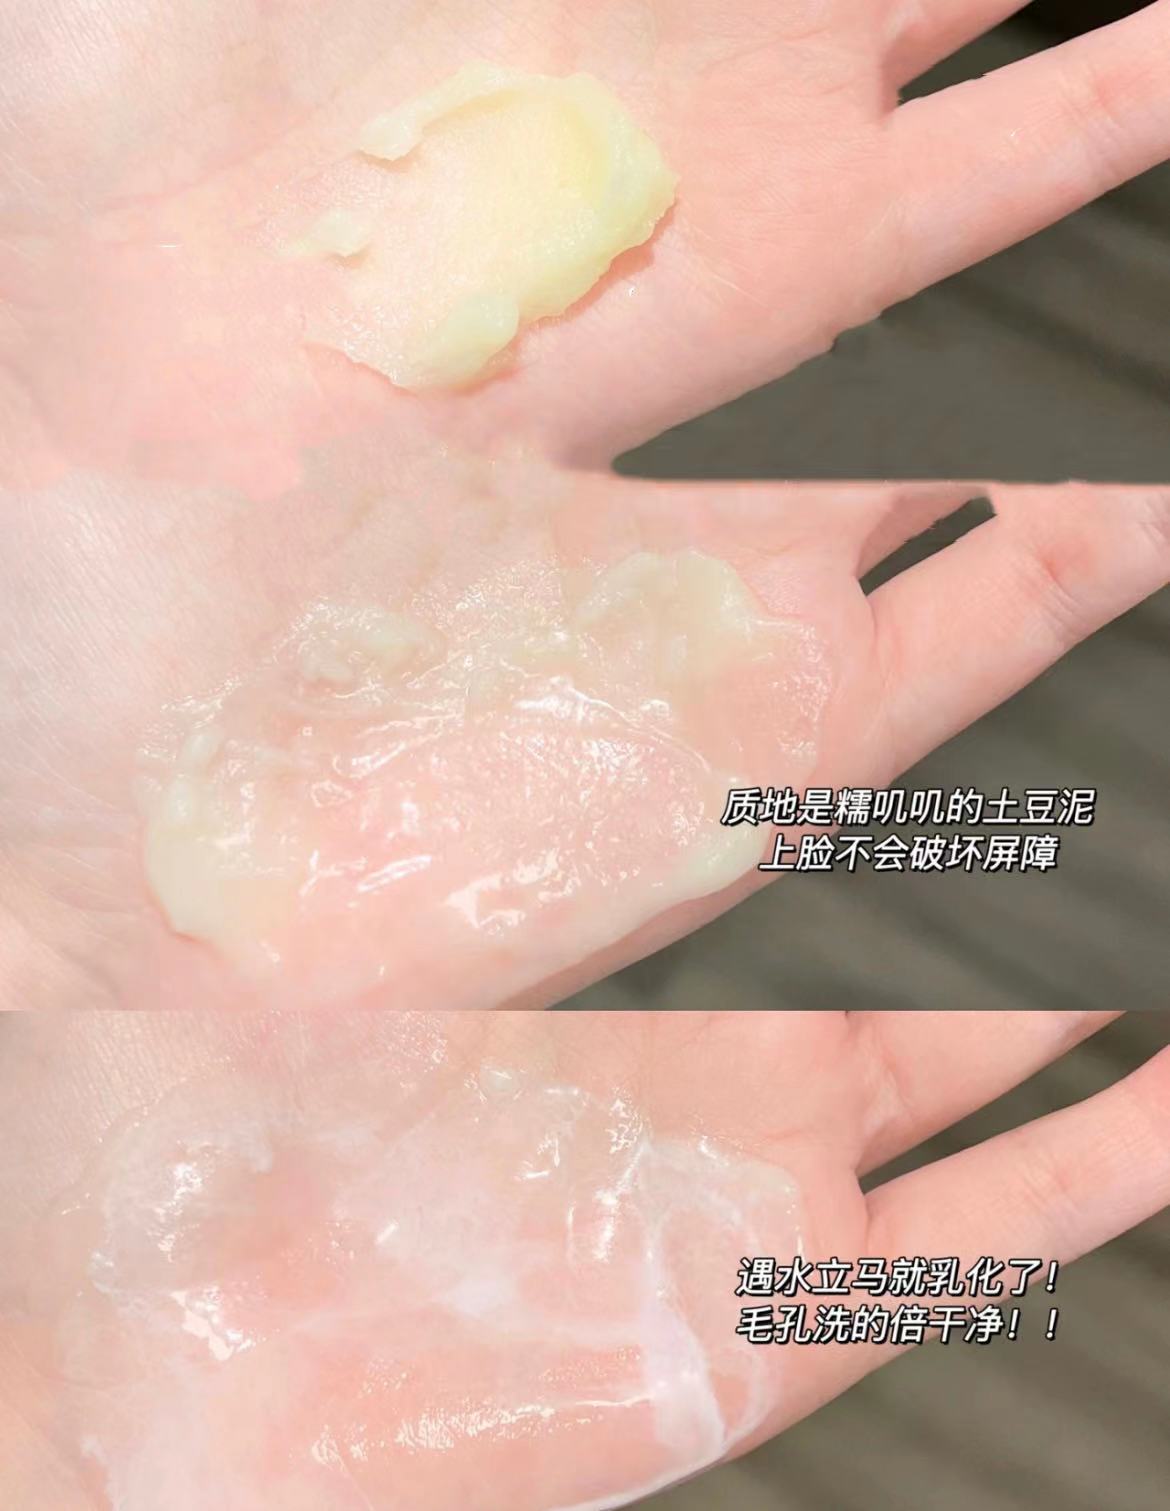 Tiktok/Douyin Hot  JOYRUQO Light Skin Cleansing Cream 85ml【Tiktok抖音爆款】娇润泉轻肌净颜卸妆膏